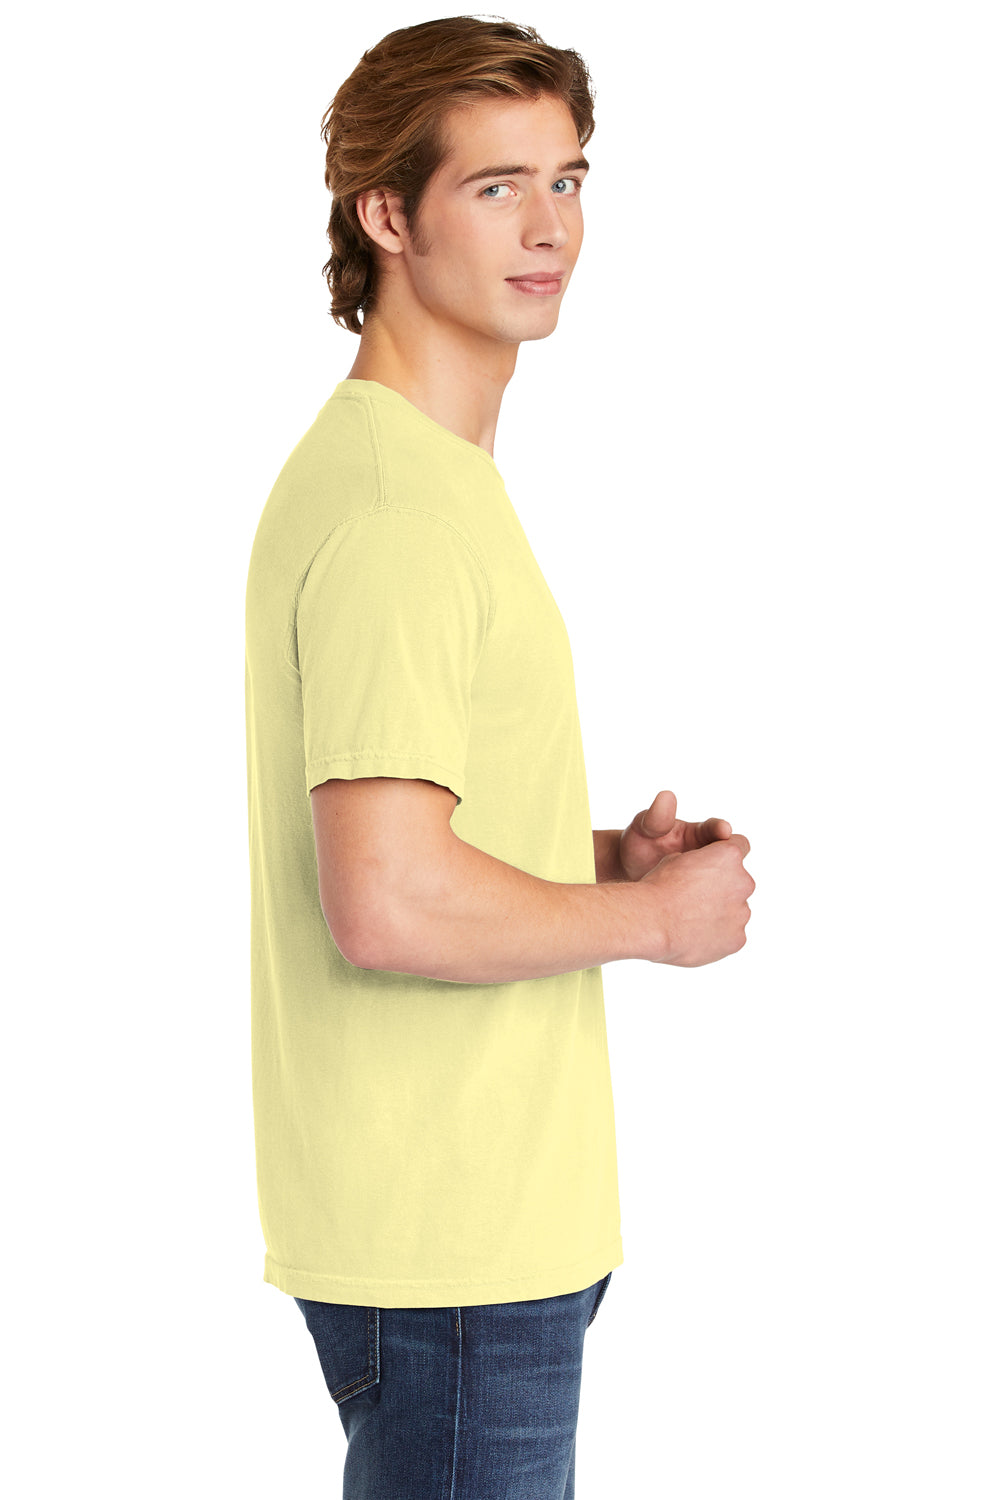 Comfort Colors 1717/C1717 Mens Short Sleeve Crewneck T-Shirt Banana Yellow Side